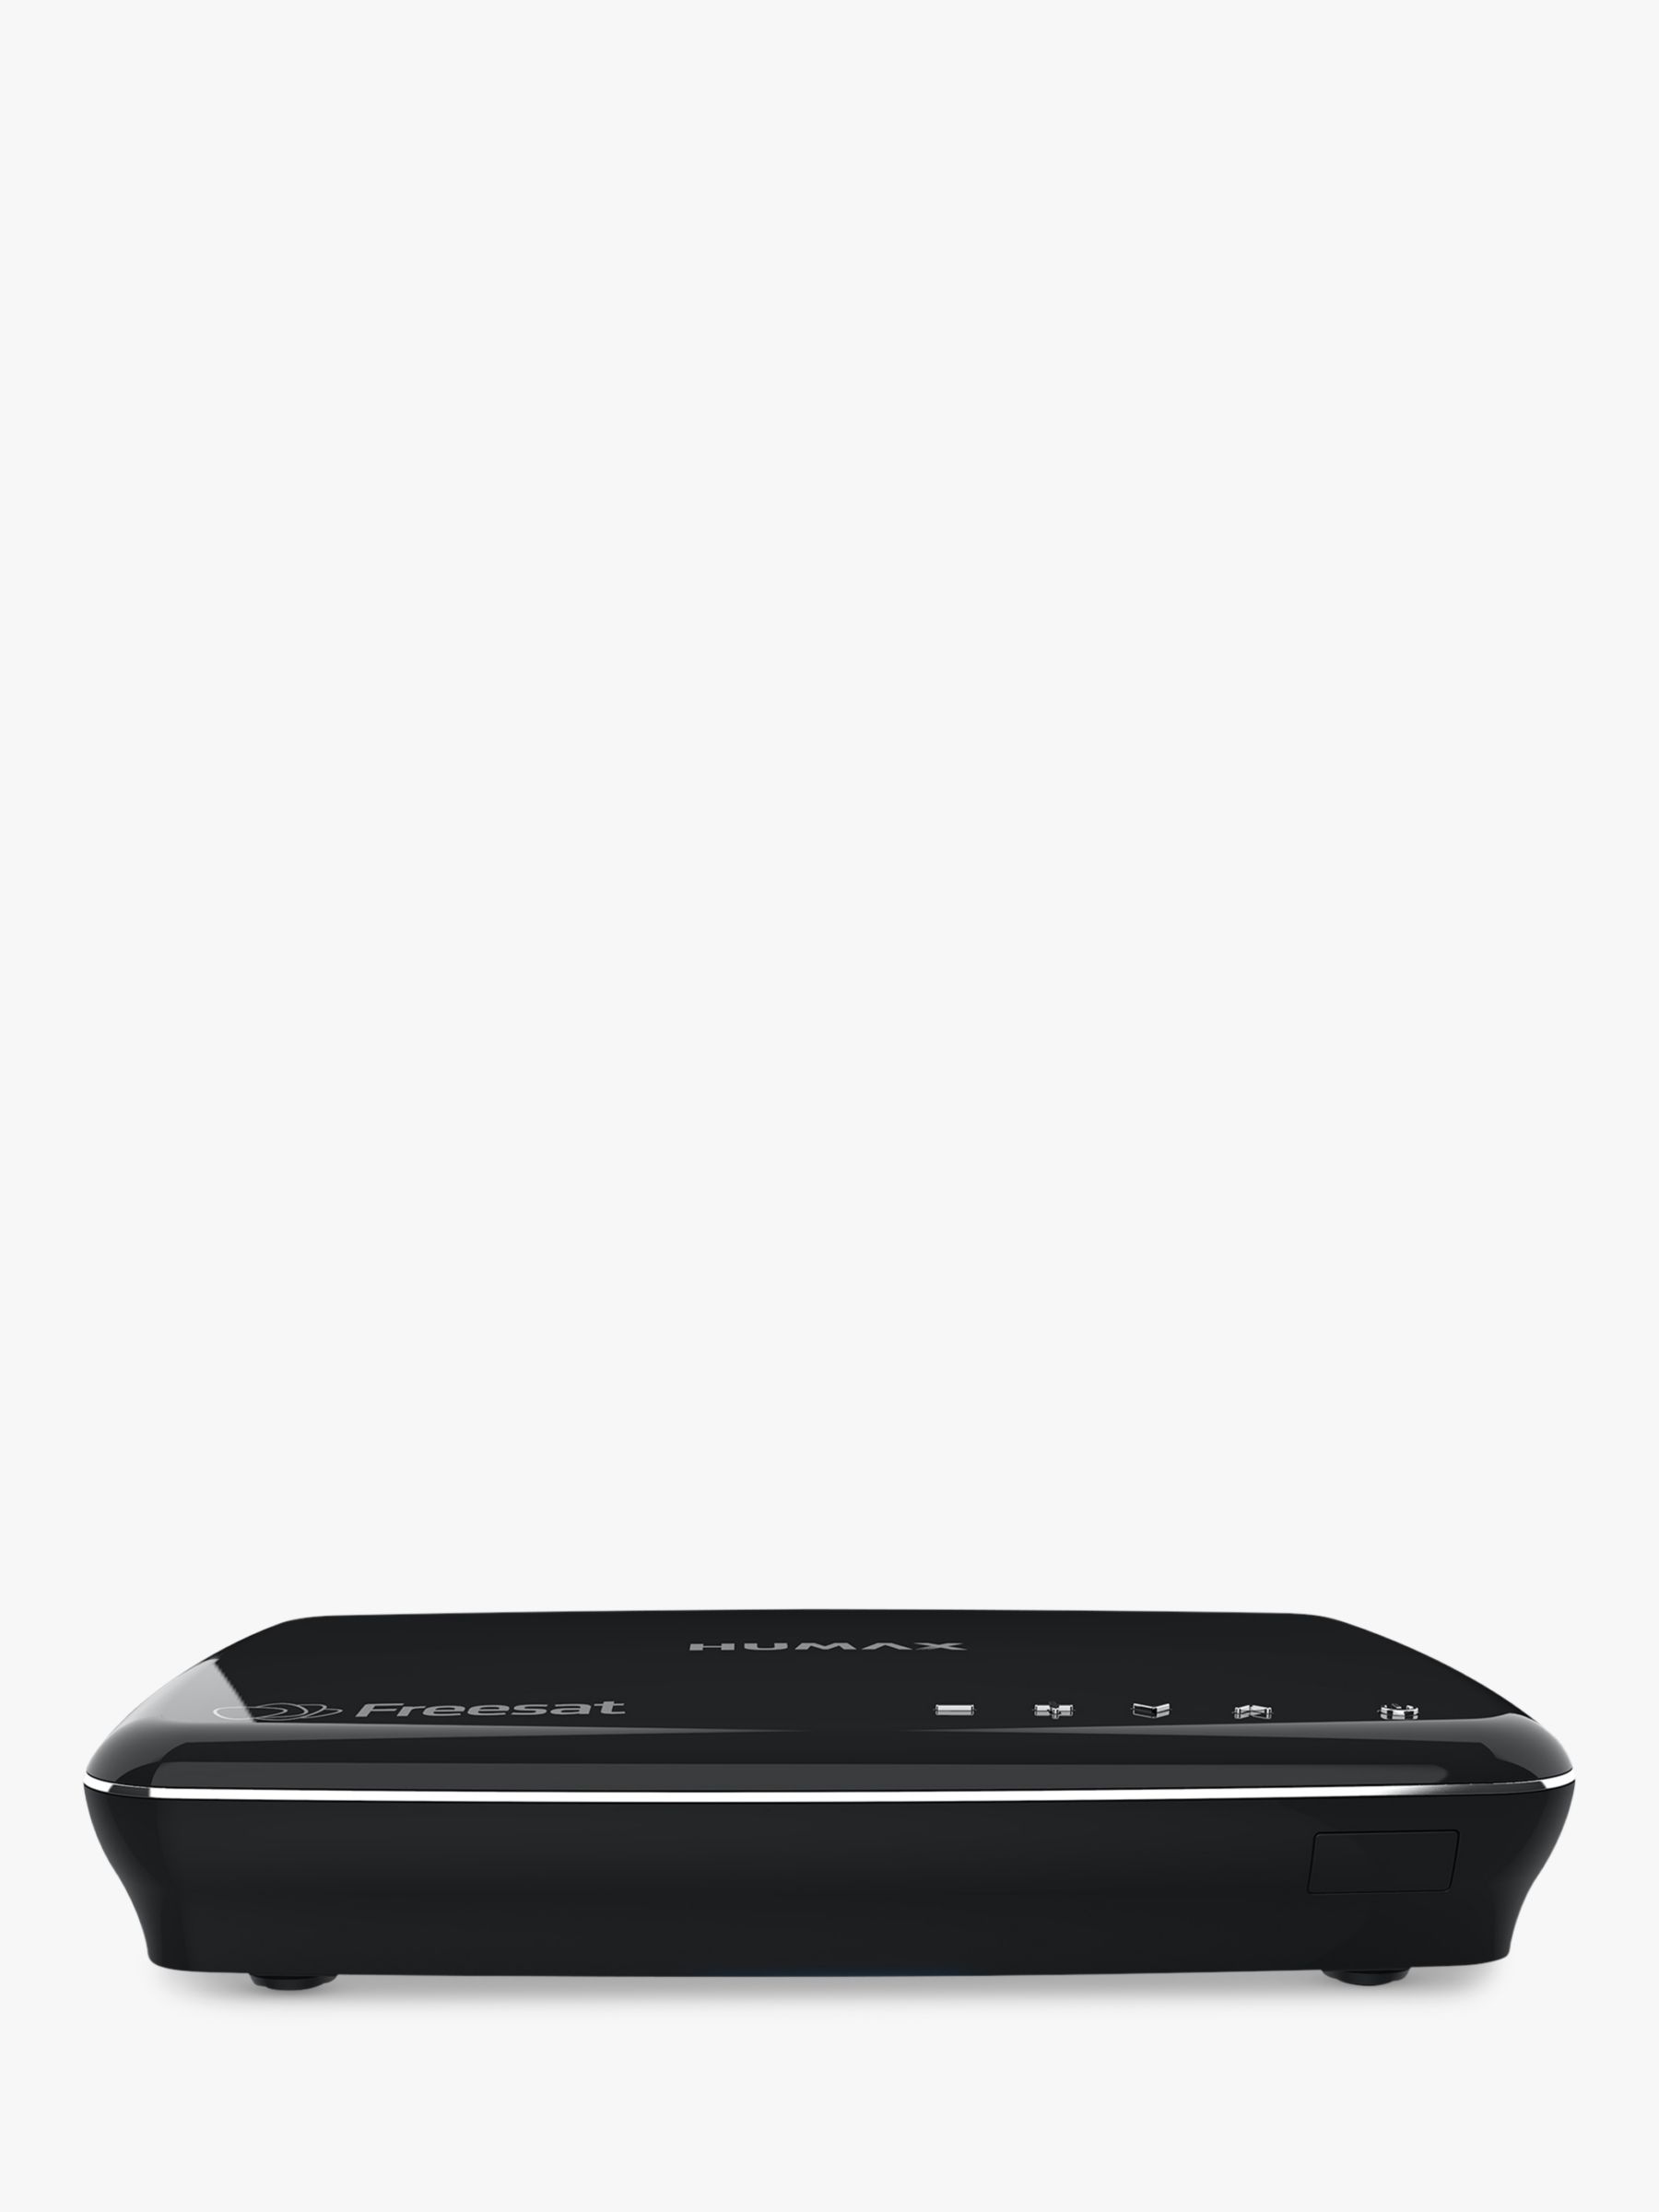 Humax HDR-1100S Smart 1TB Freesat Digital TV Recorder